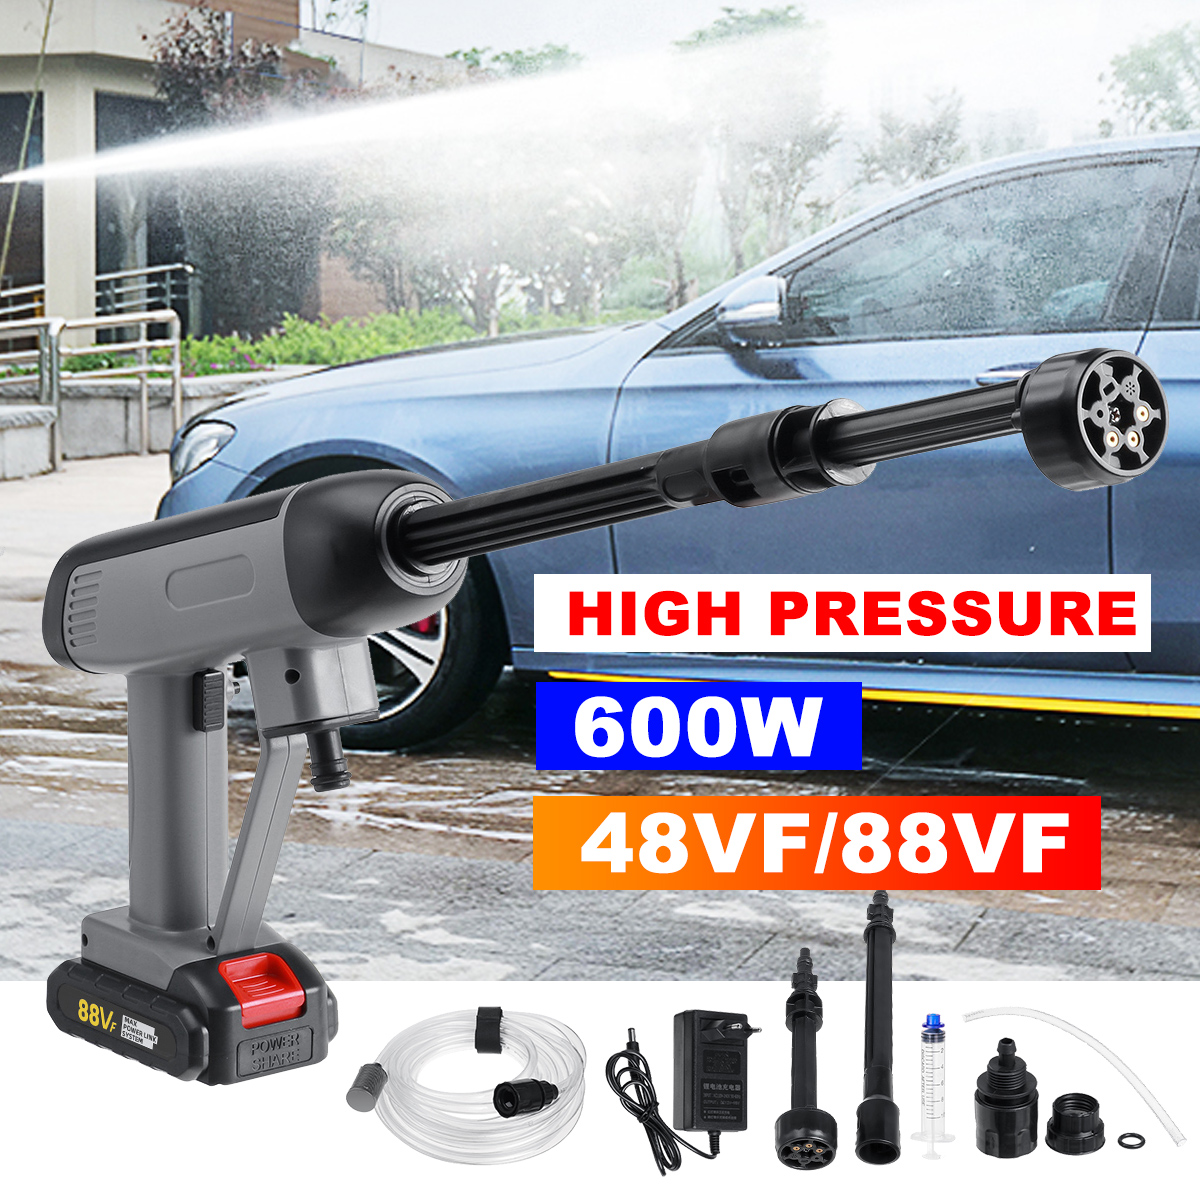 48VF88VF-High-Pressure-Washer-Wireless-Car-Washing-Machine-Cleaning-Water-Spray-Guns-W-Battery-1860315-2